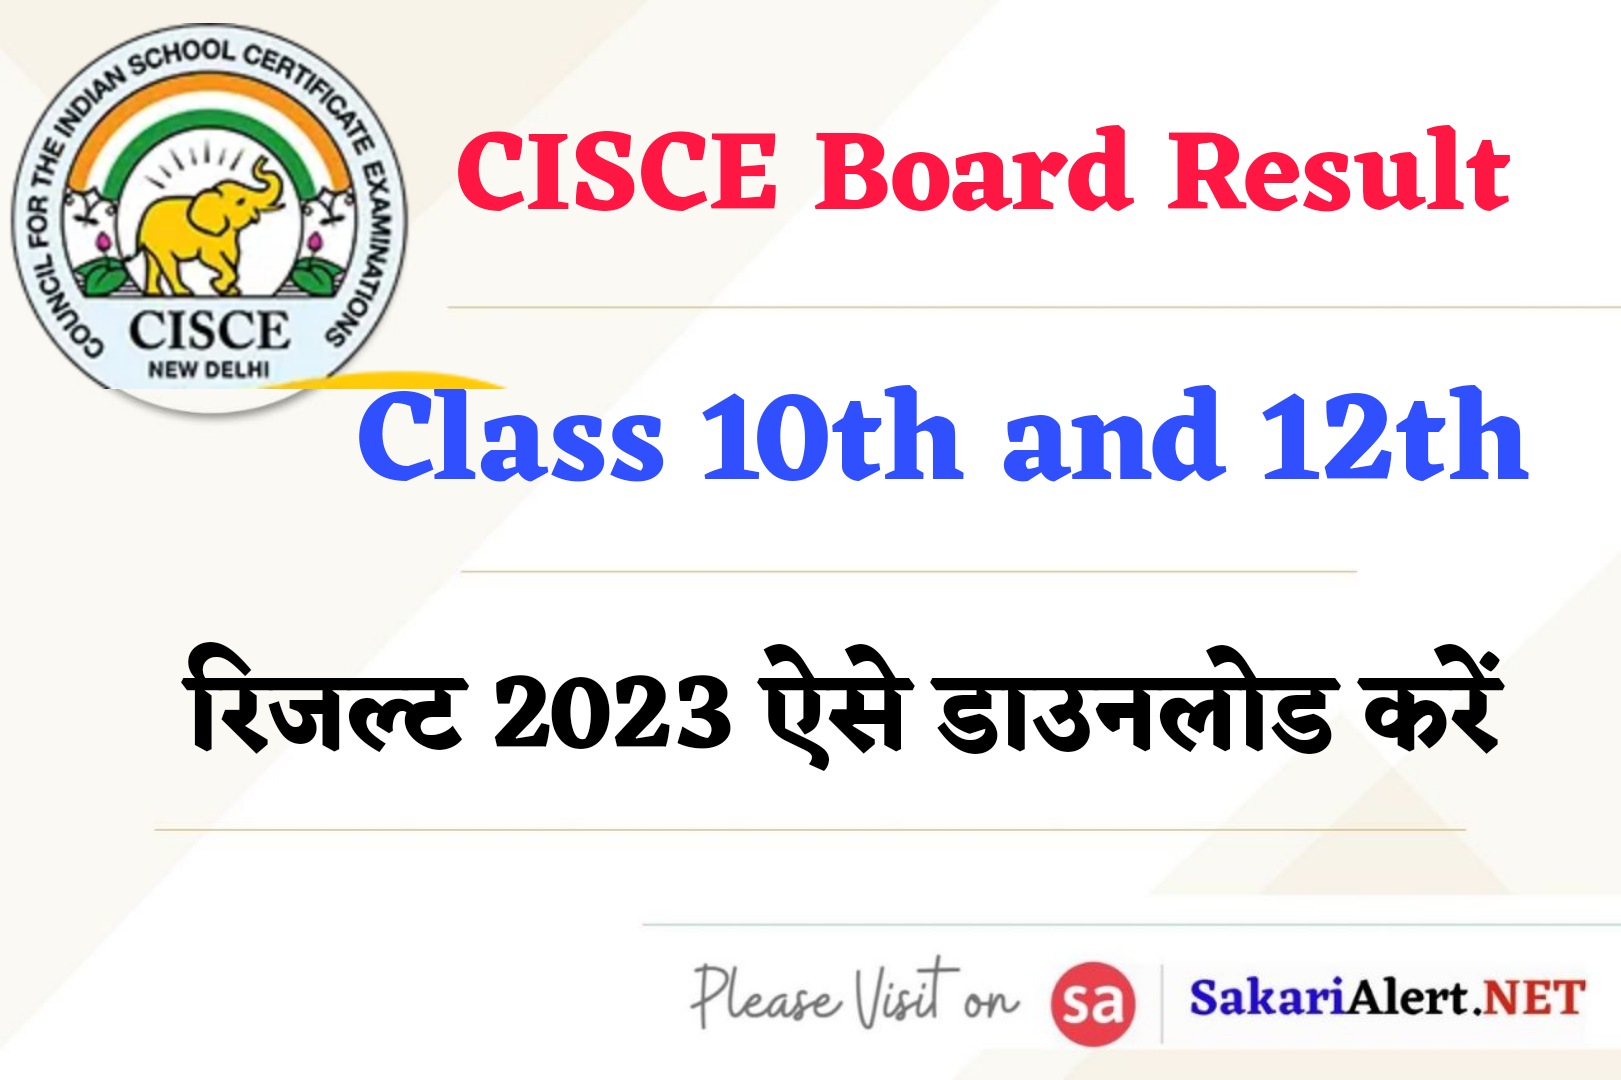 CISCE Board Class 10th and 12th Result 2023 | सीआईएससीई बोर्ड परीक्षा रिजल्ट जारी (Decleard)